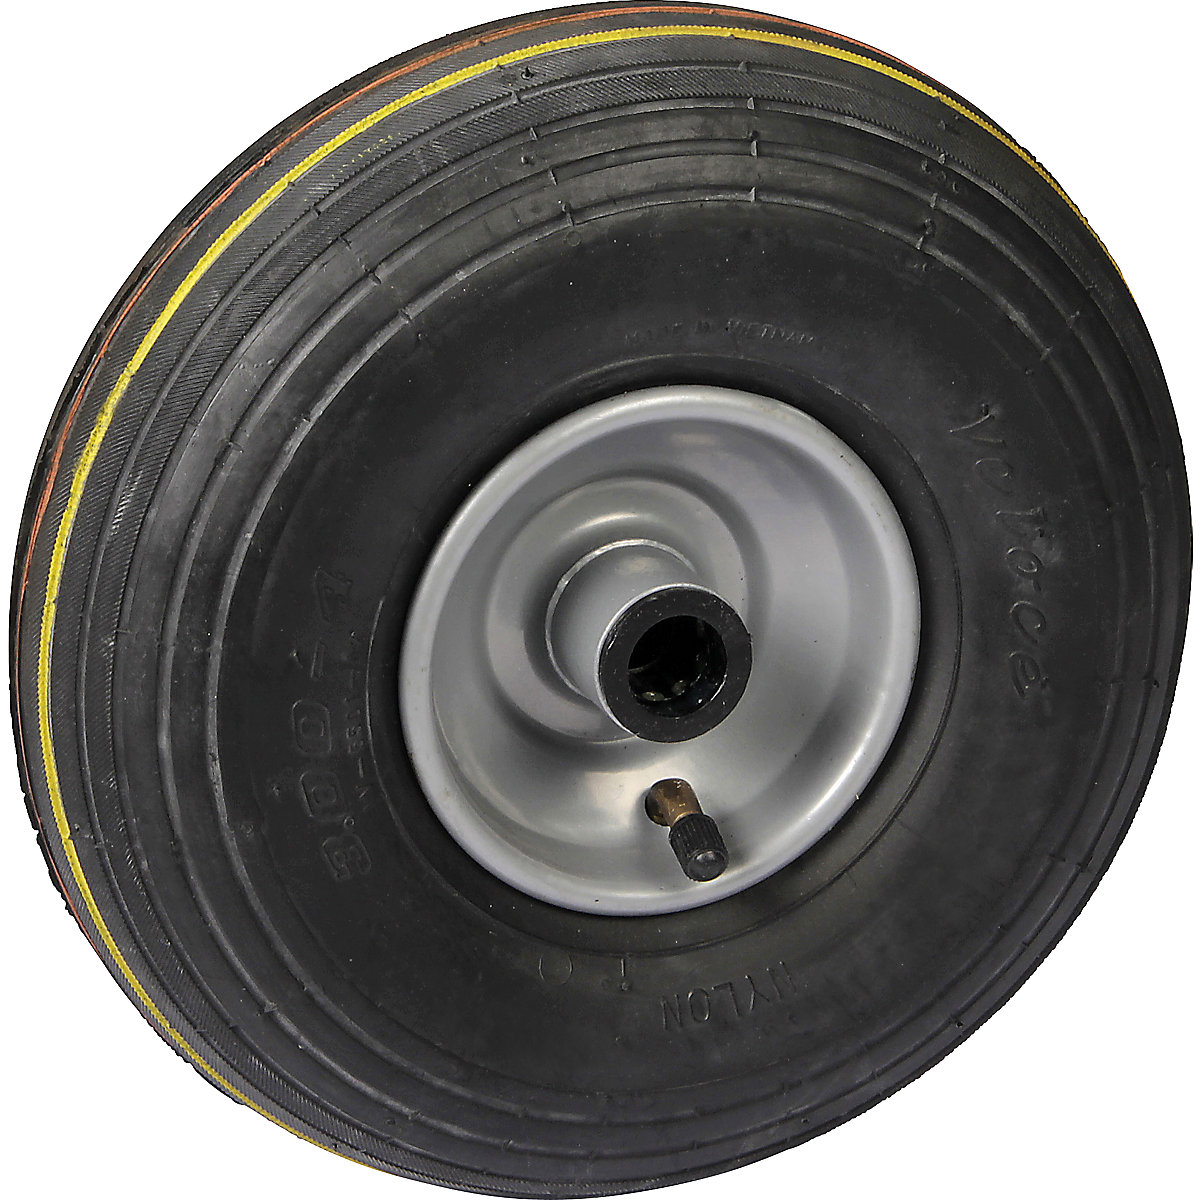 Pneumatika, kolo s 1dílným diskem z ocelového plechu, Ø x šířka kola 260 x 85 mm, profil obruče s drážkami, s válečkovými ložisky-6